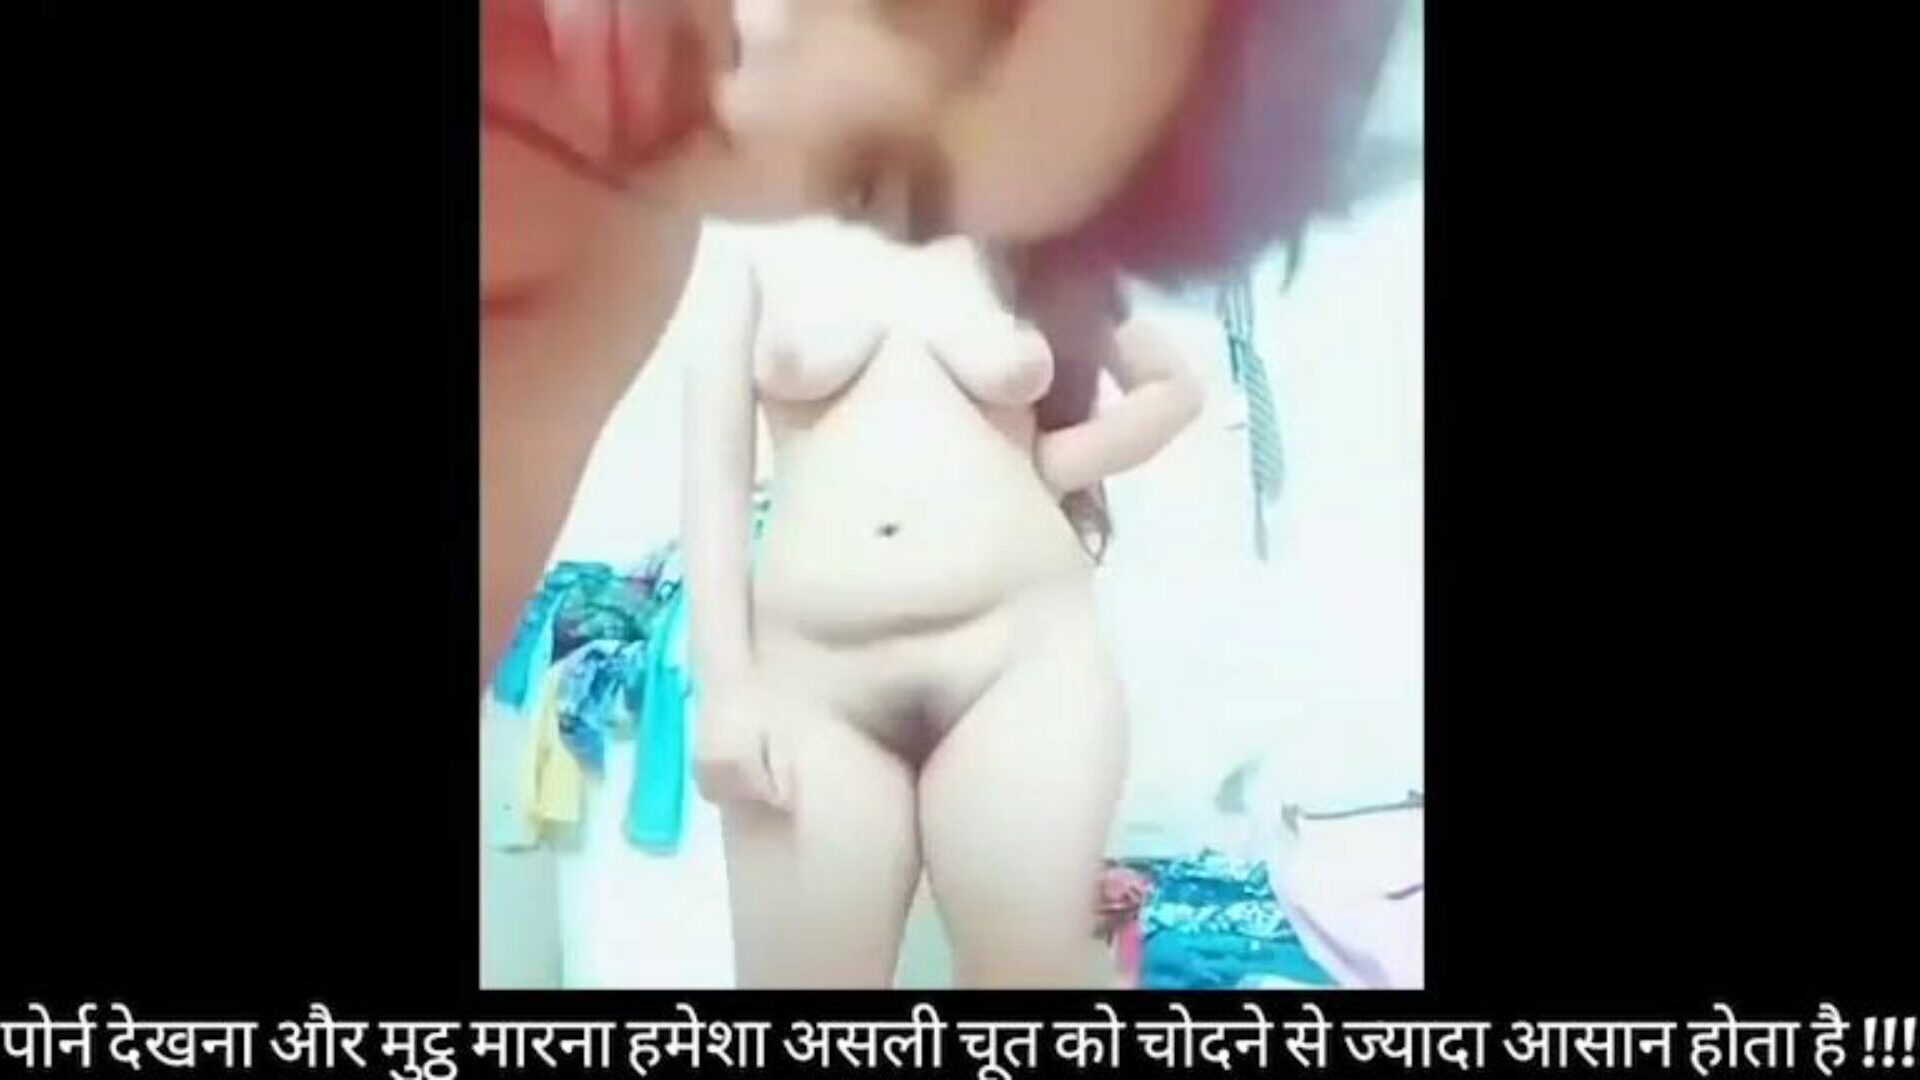 bangladeshi college girl porn